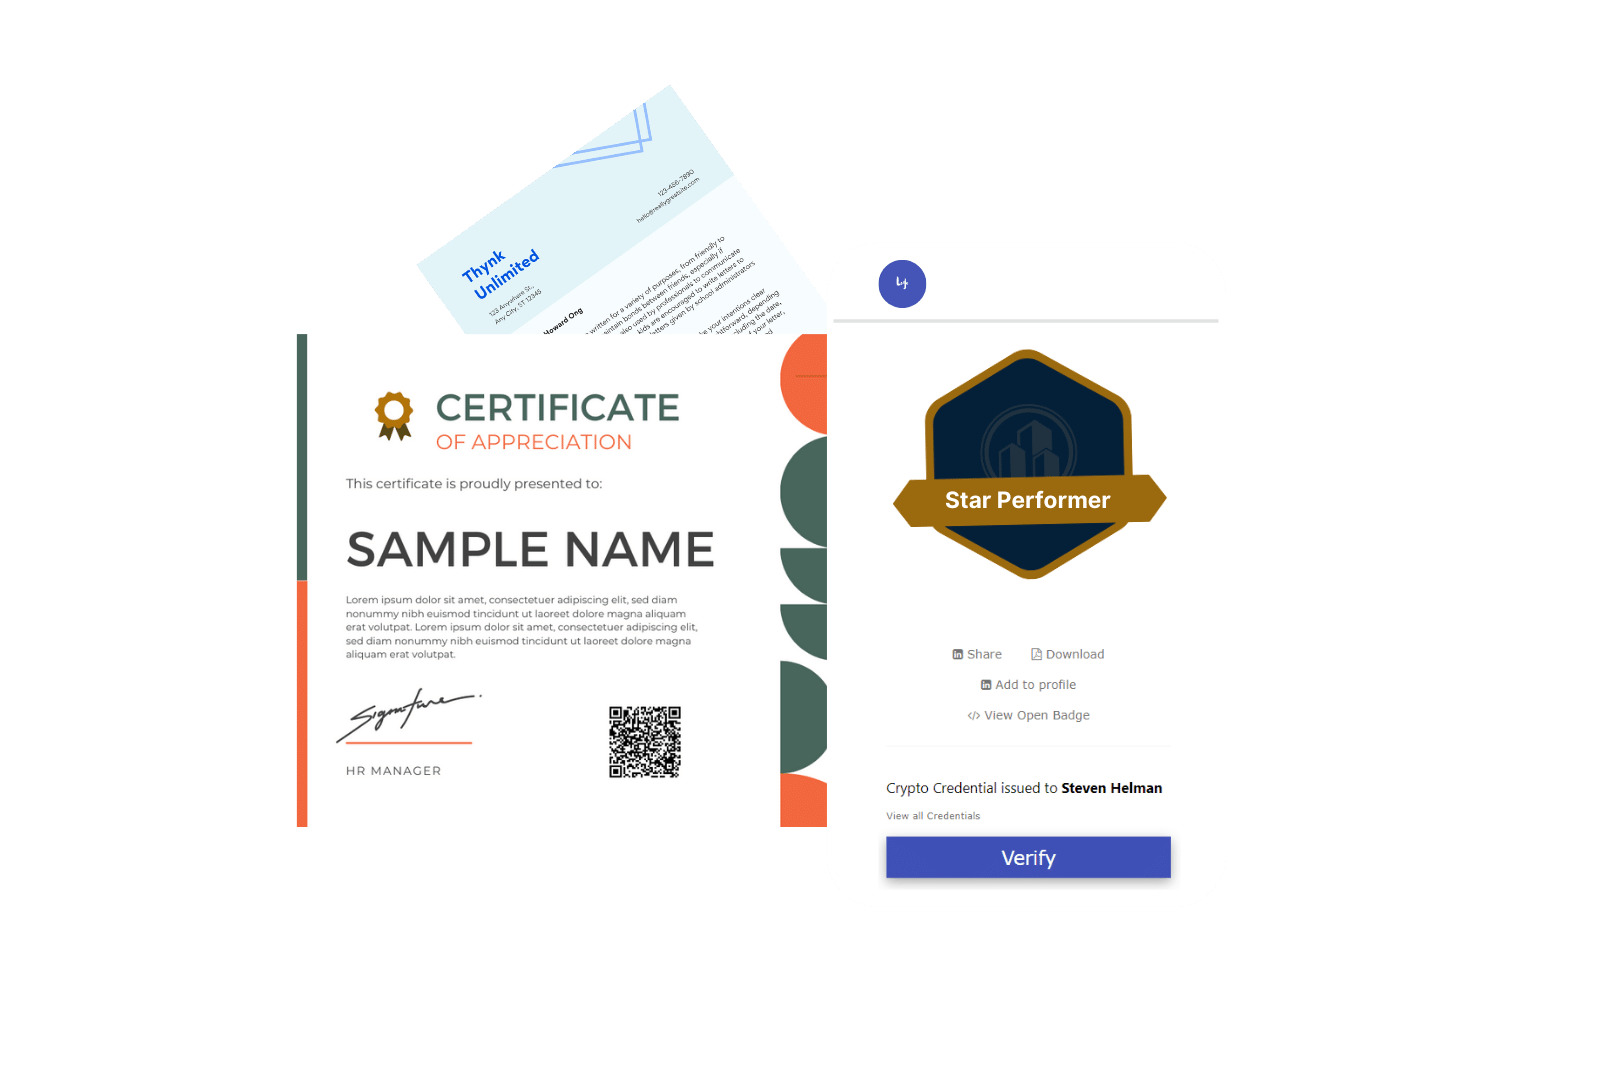 Digital Certificates and Badges